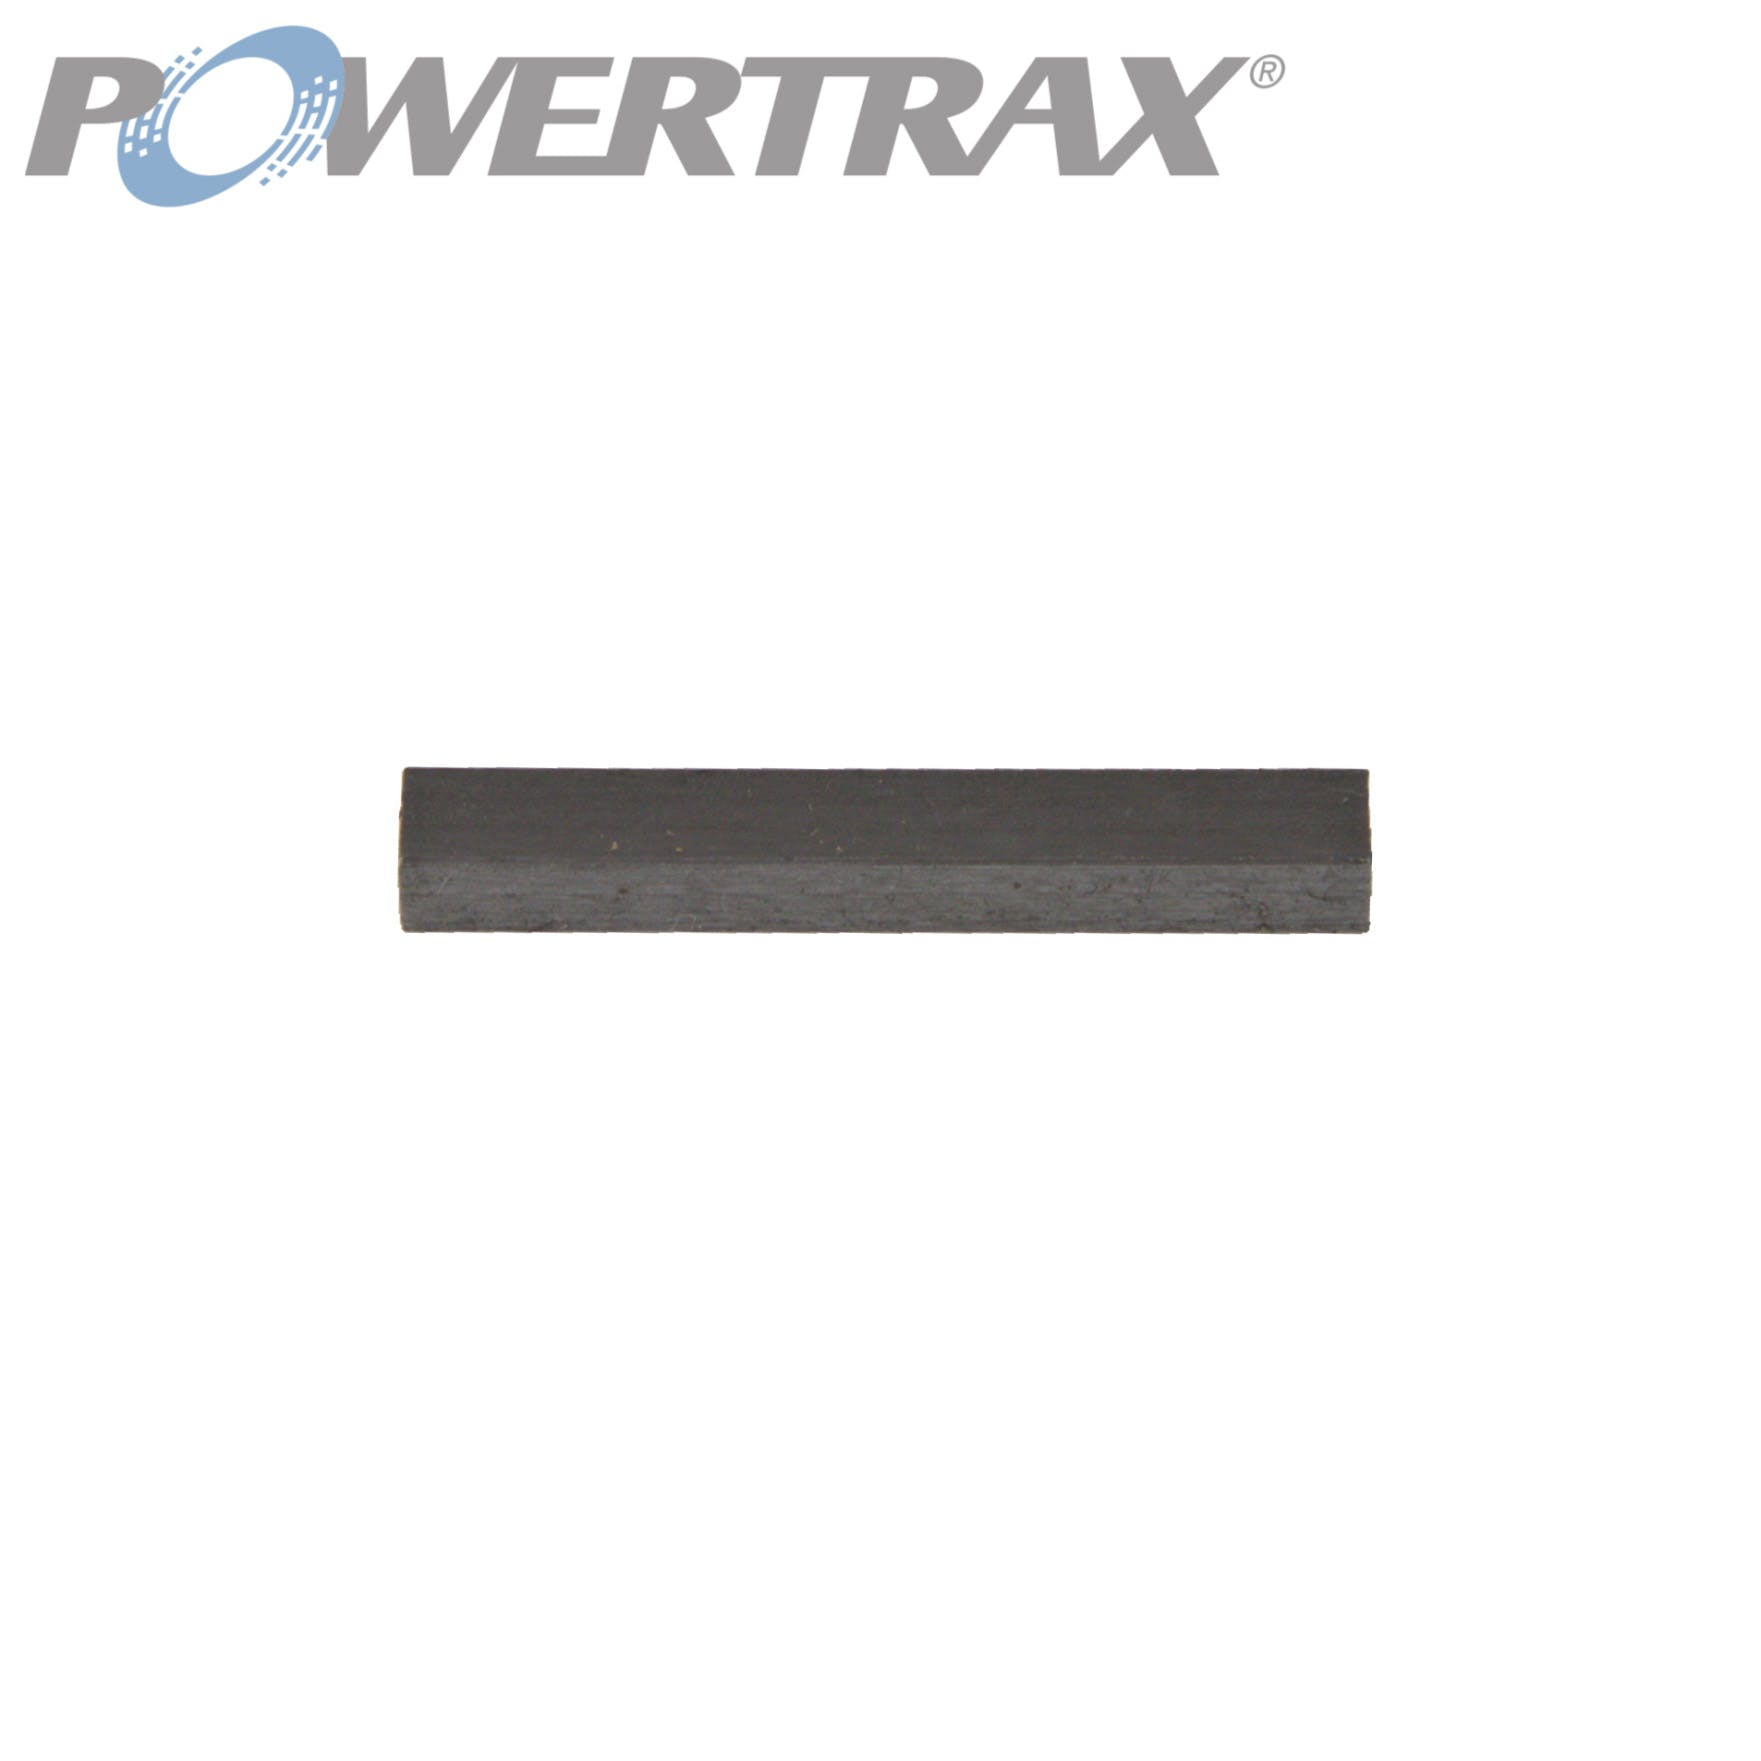 PowerTrax 4211003 Inspection Gap Tool